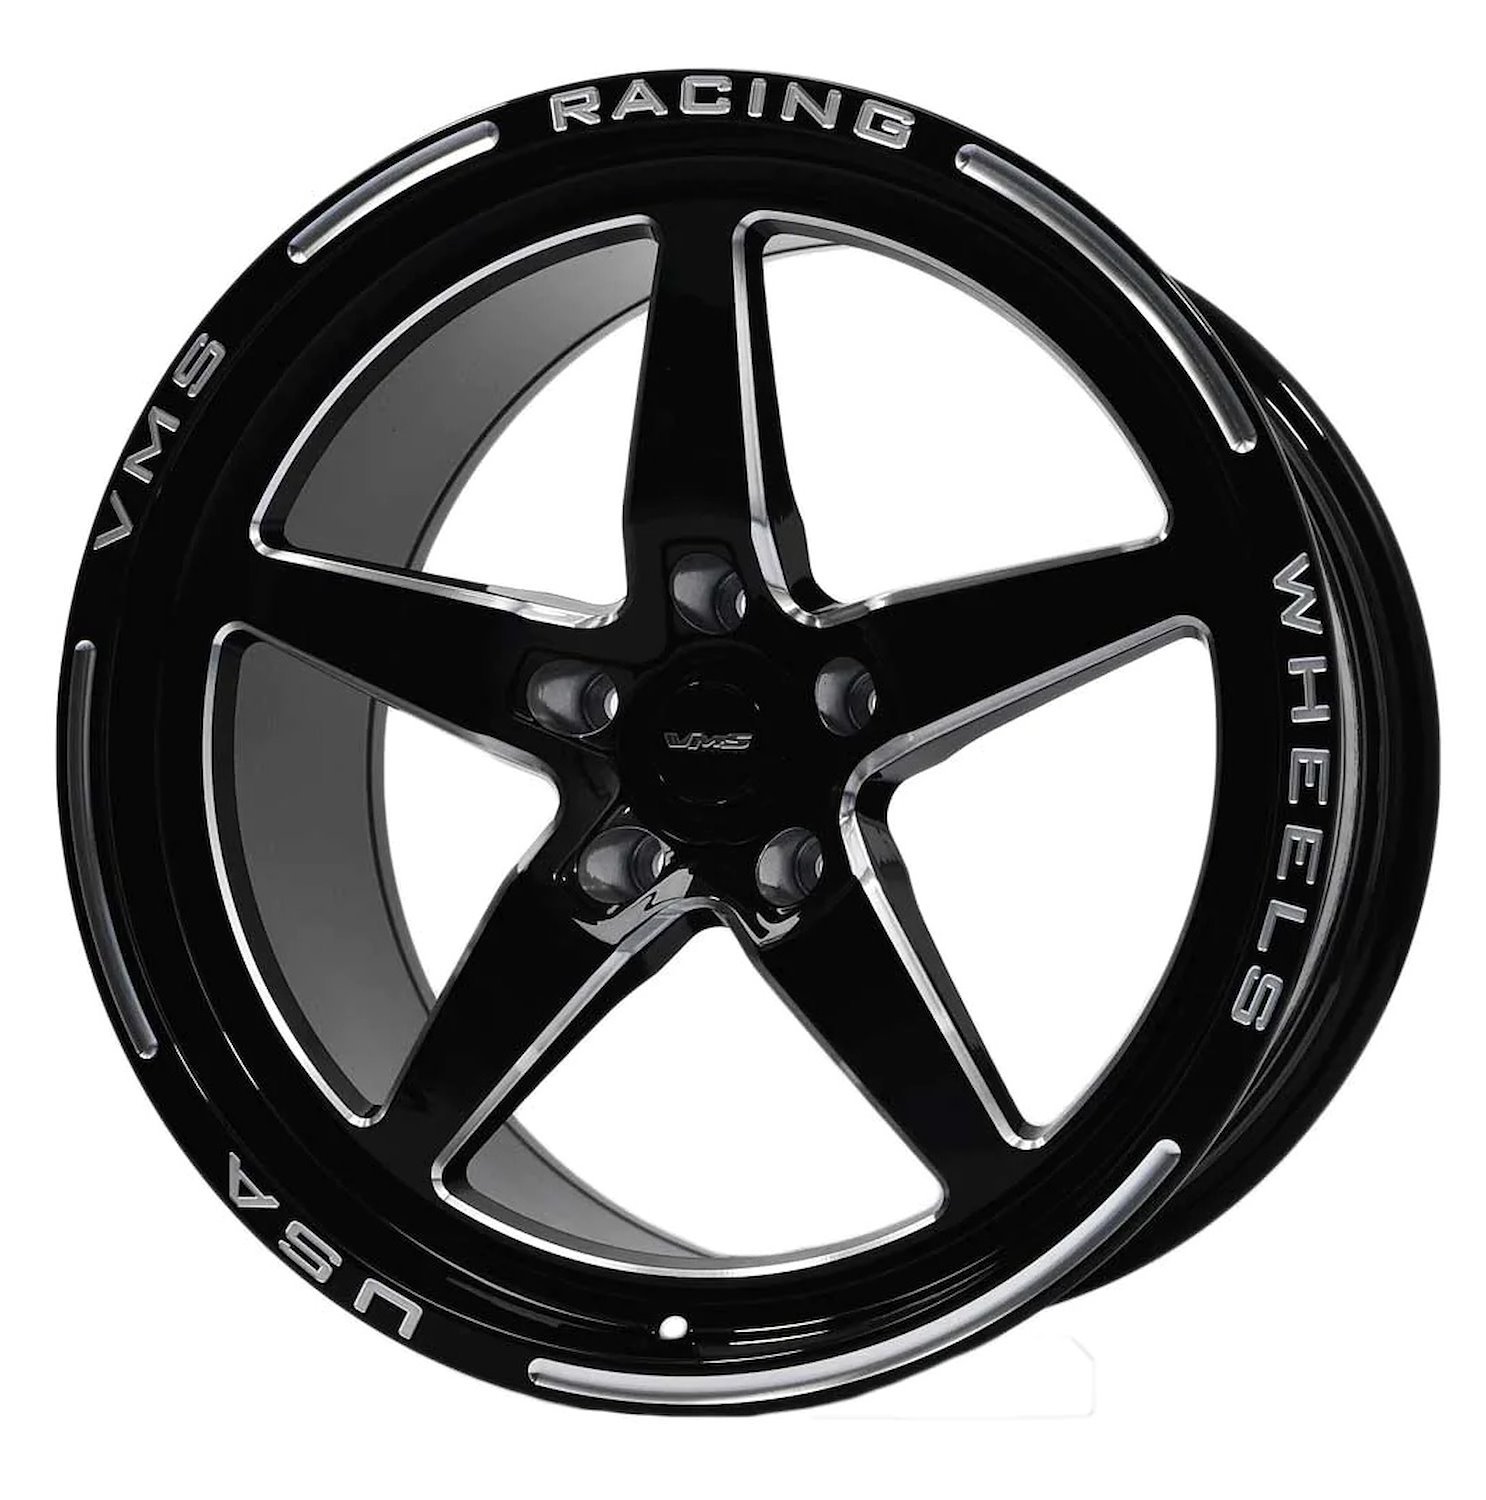 VWST041 V-Star Wheel, Size: 18" x 9.5", Bolt Pattern: 5 x 108 mm [Finish: Gloss Black Milled]